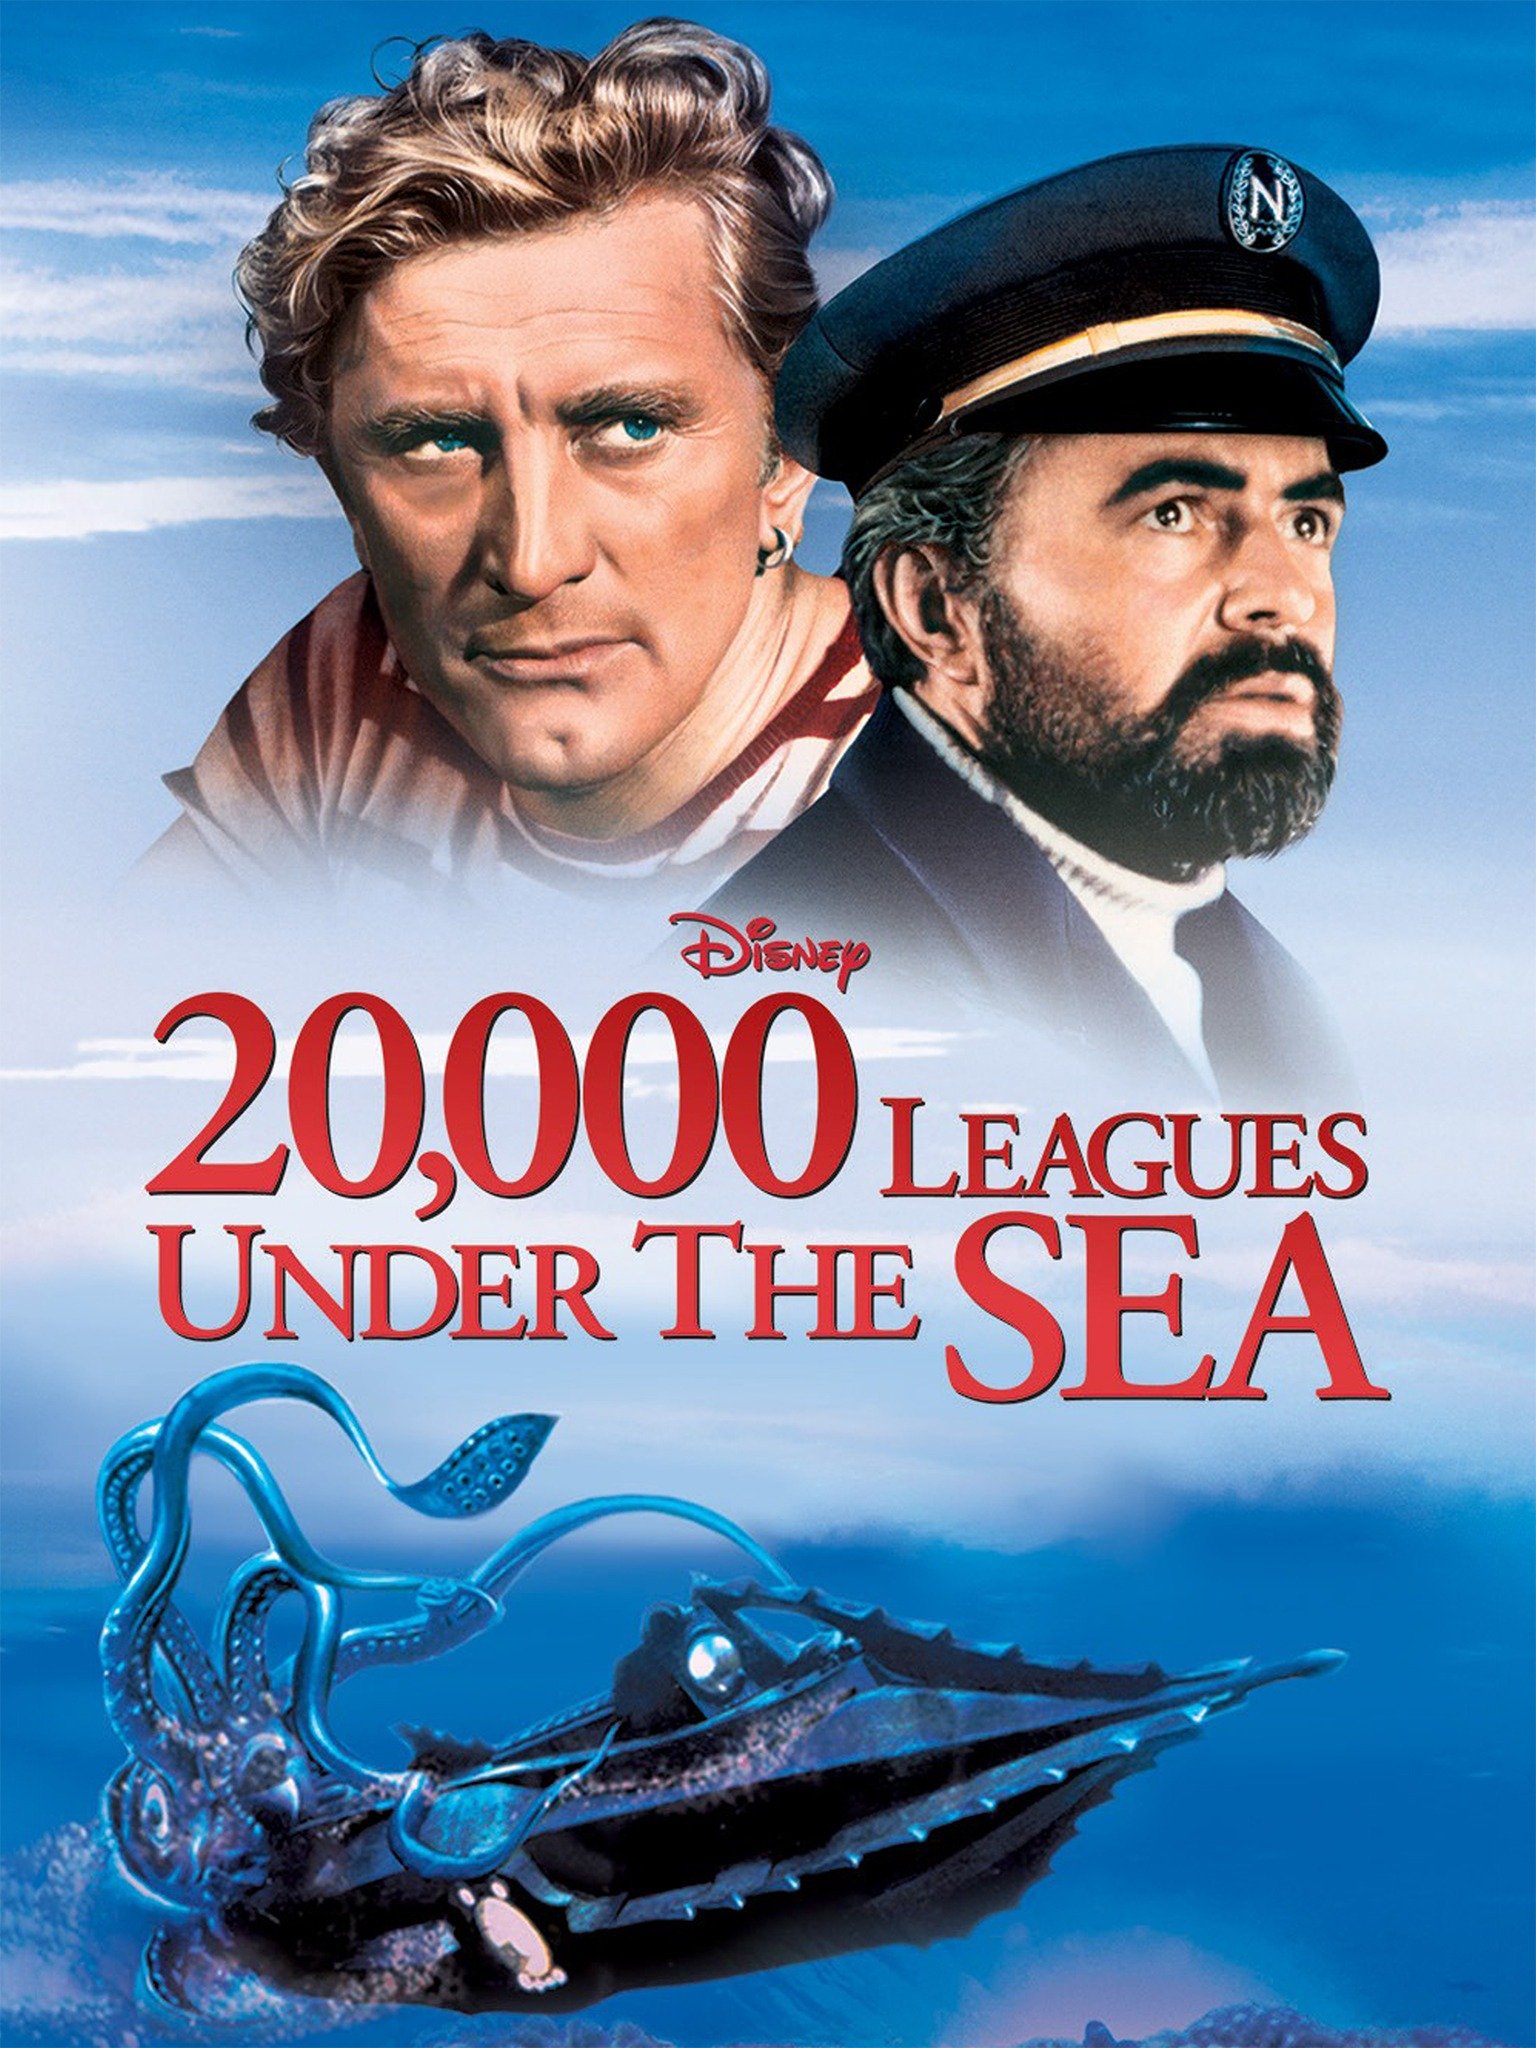 10 thousand leagues under the sea - ferparts